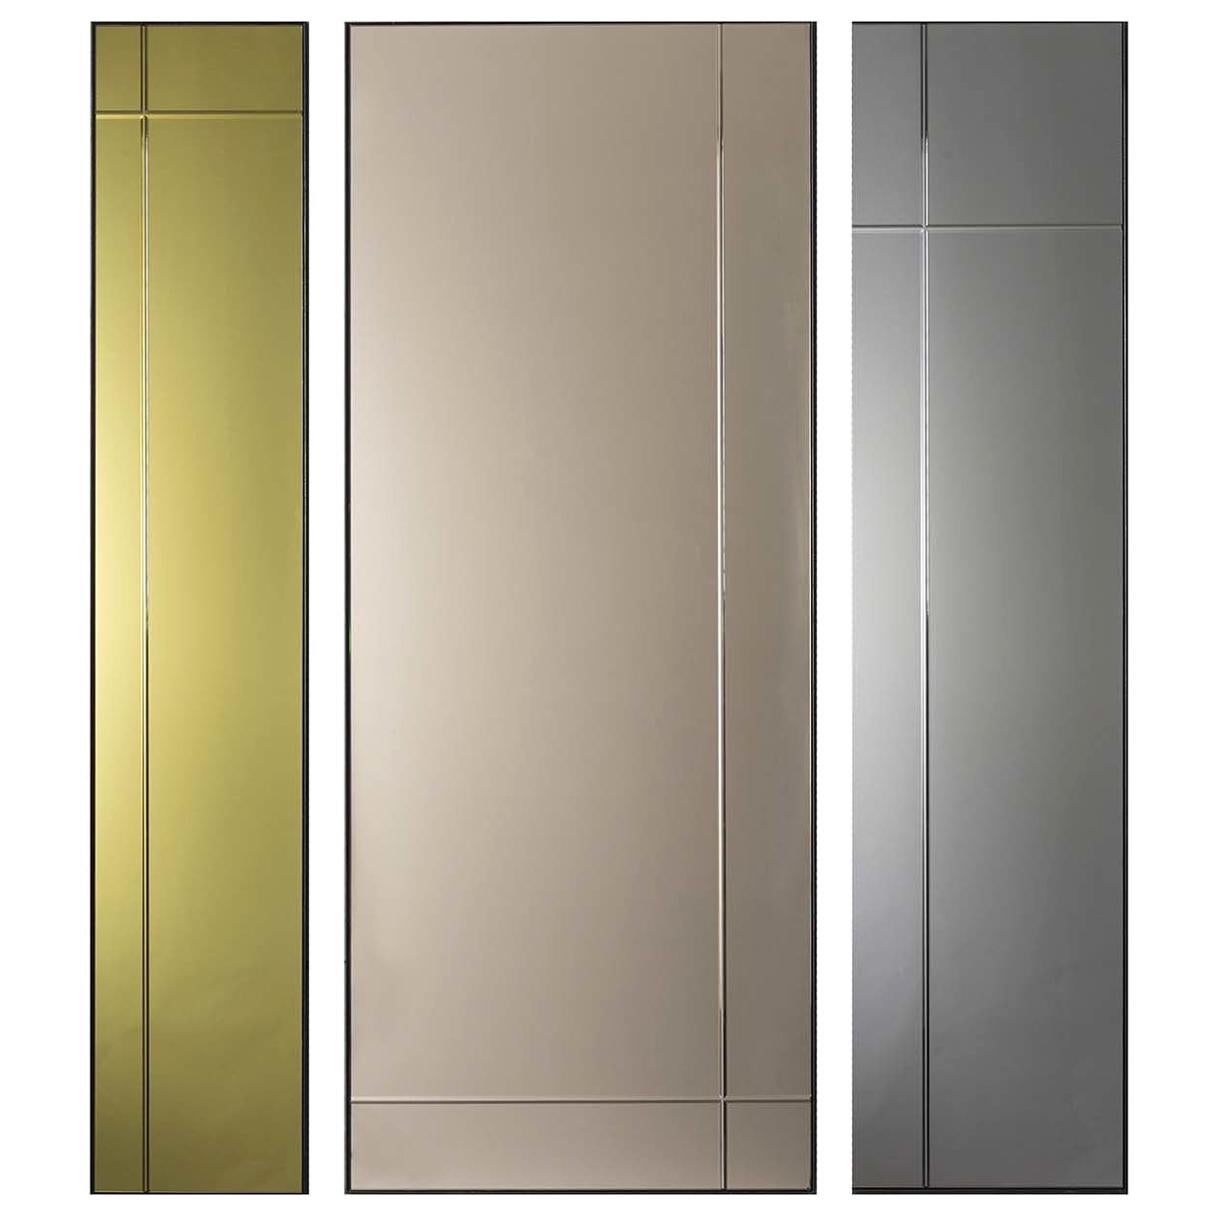 Passage Set of Three Colored Mirrors by Danya May